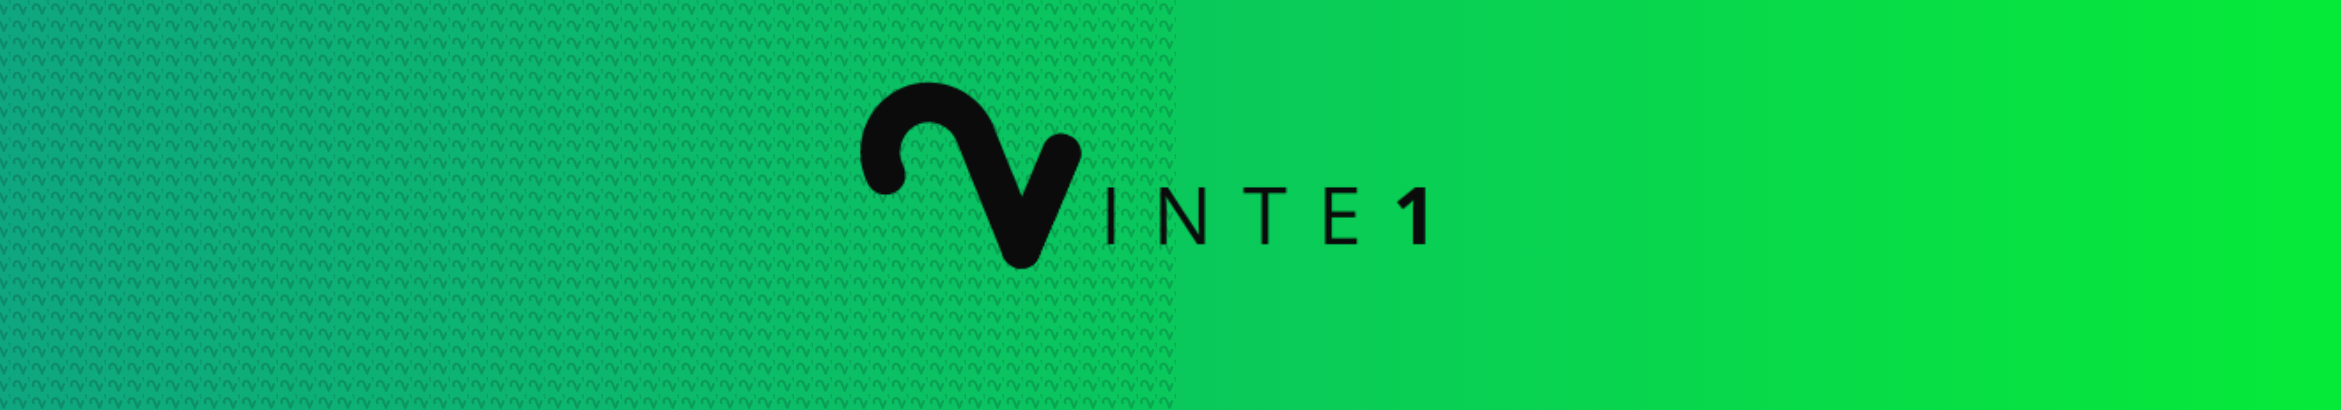 Vinte1 Design's profile banner